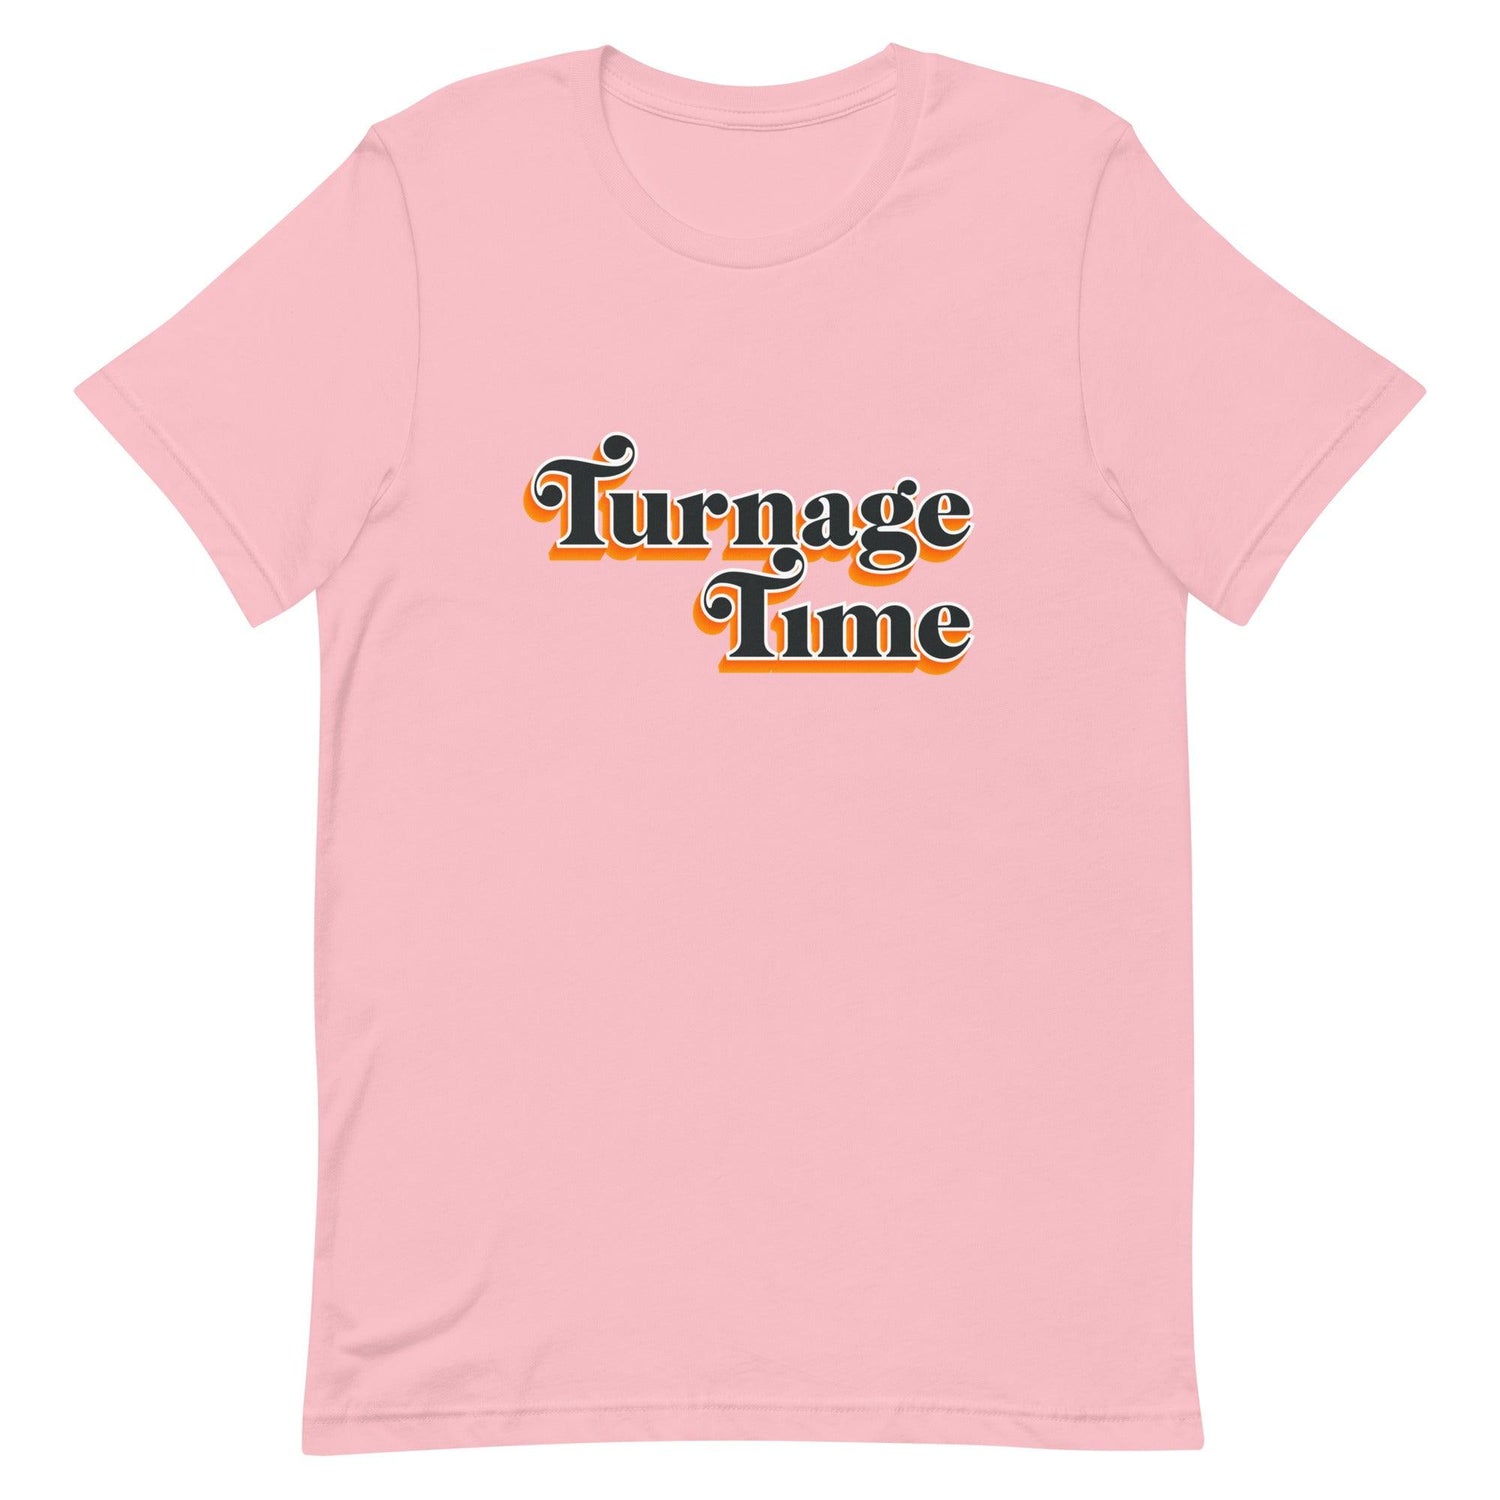 Brandon Turnage "Gametime" t-shirt - Fan Arch